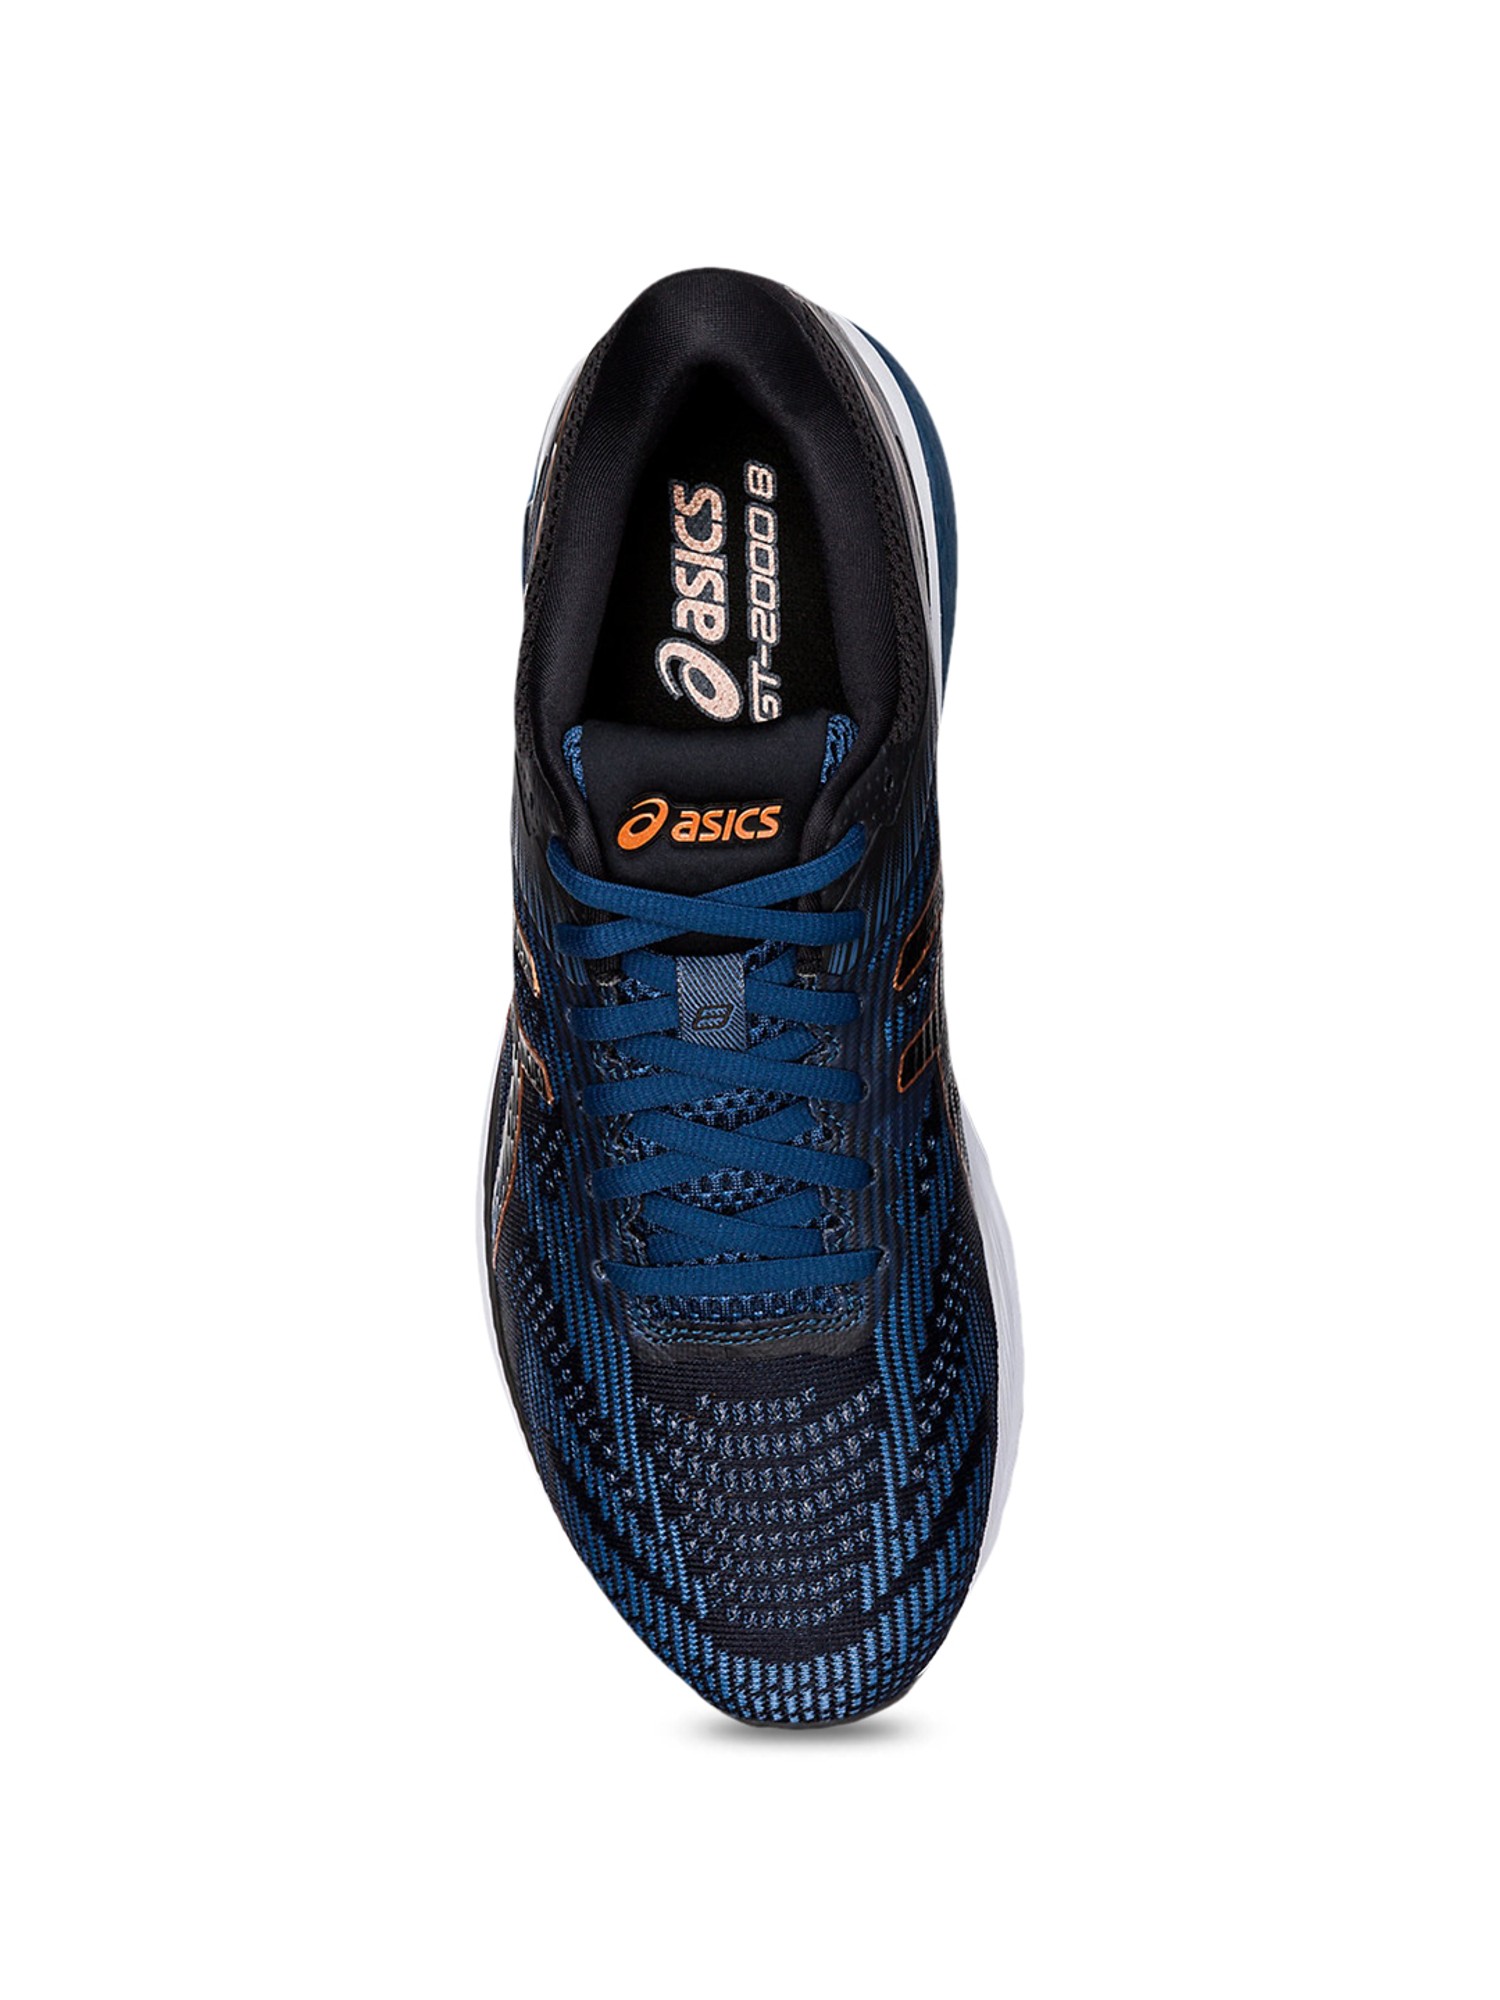 Buy Asics Navy Blue Running Shoes for Men at Best Price @ Tata CLiQ